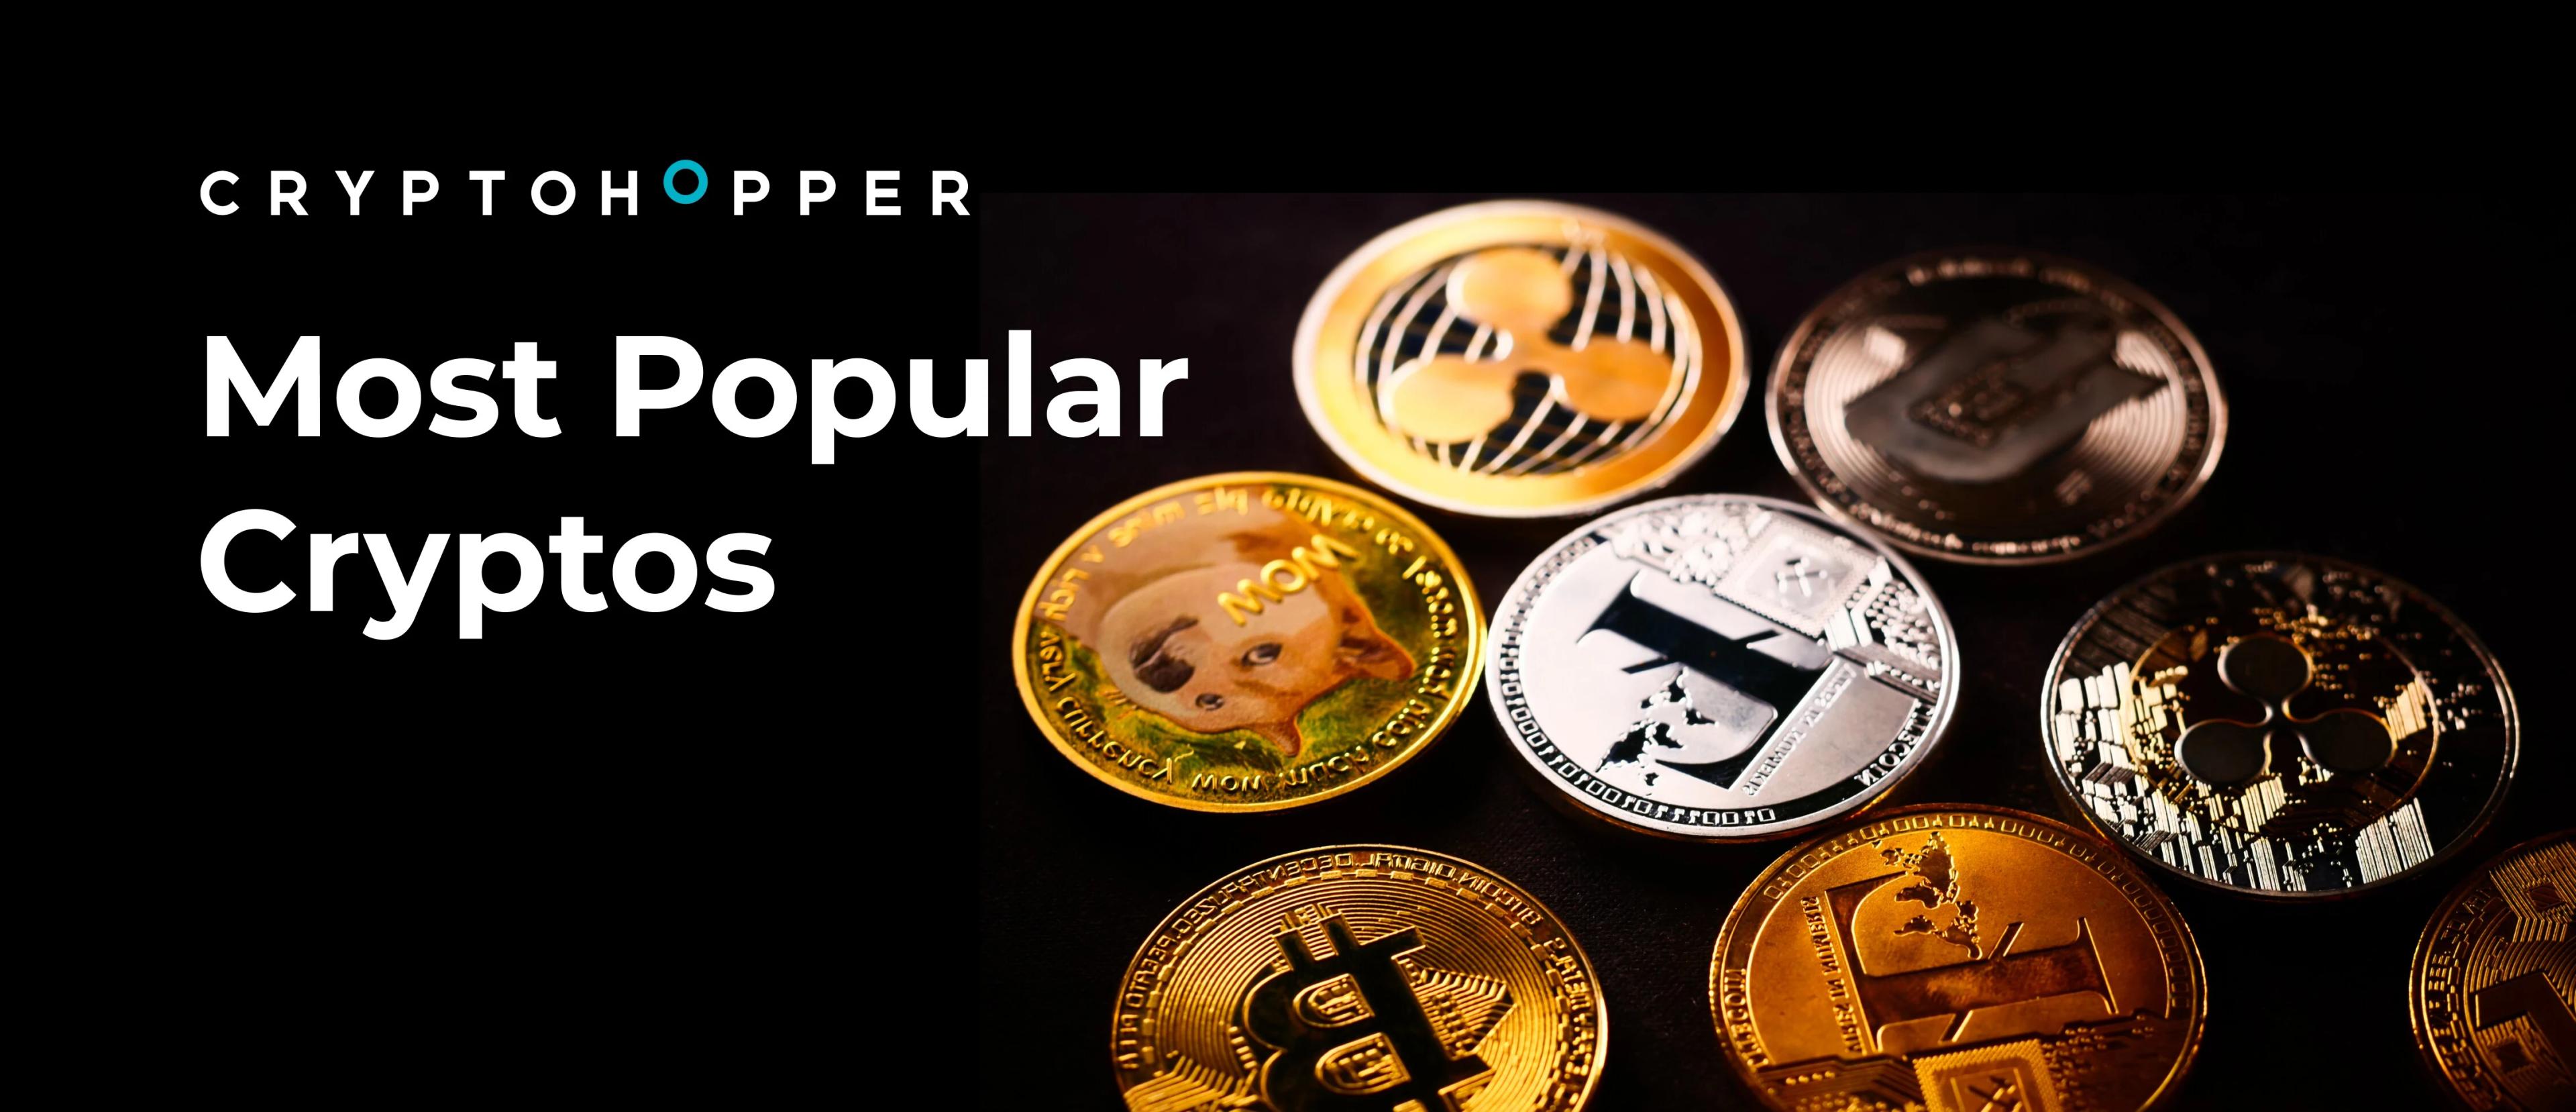 Most Popular Cryptocurrencies